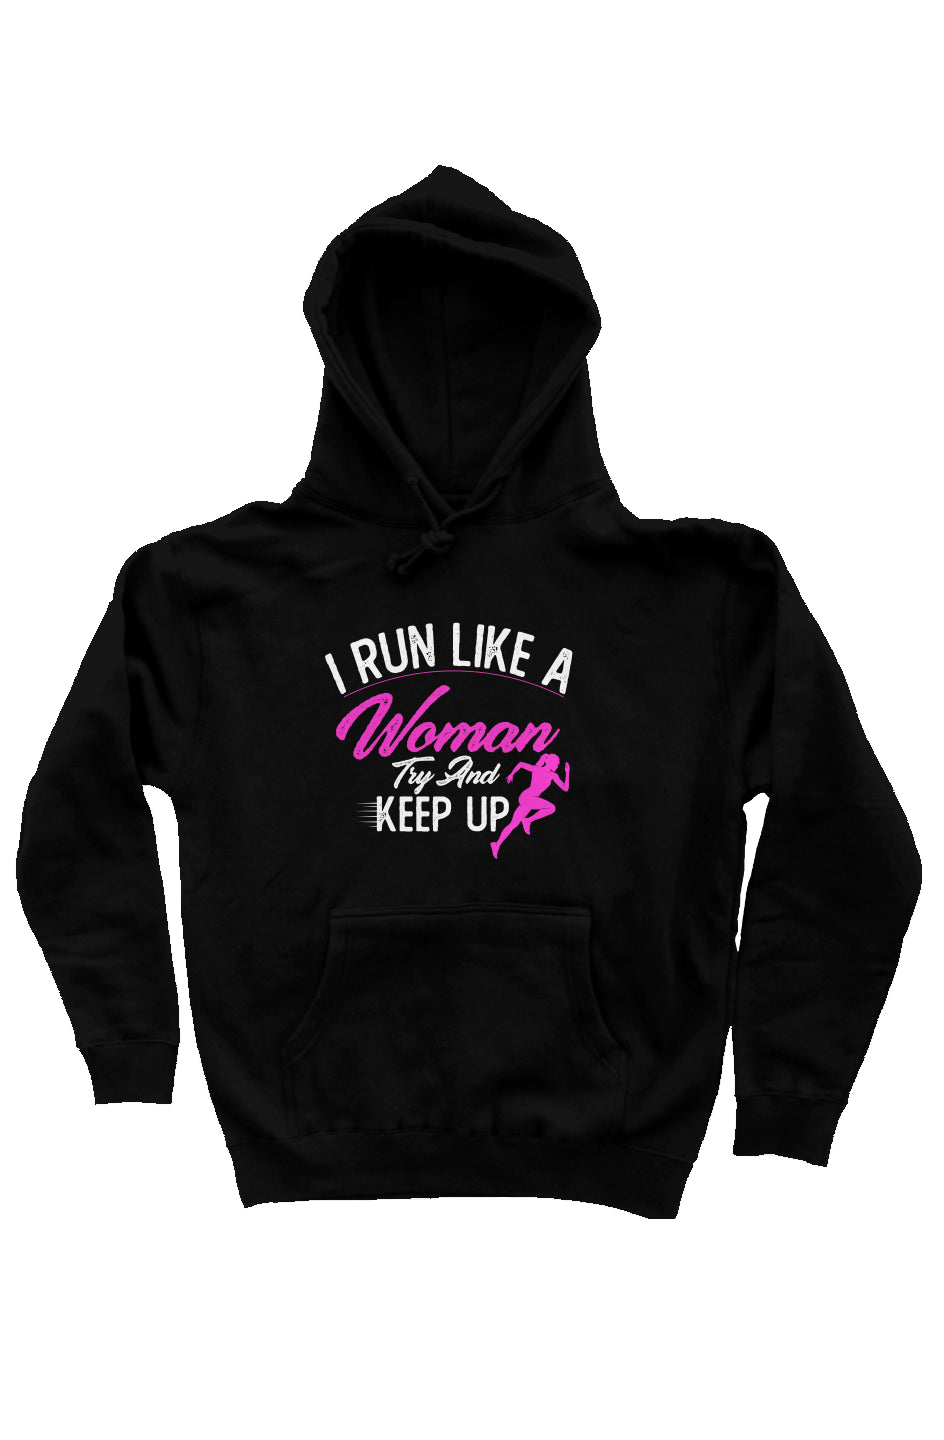 I run like a woman try and keep up hoodie